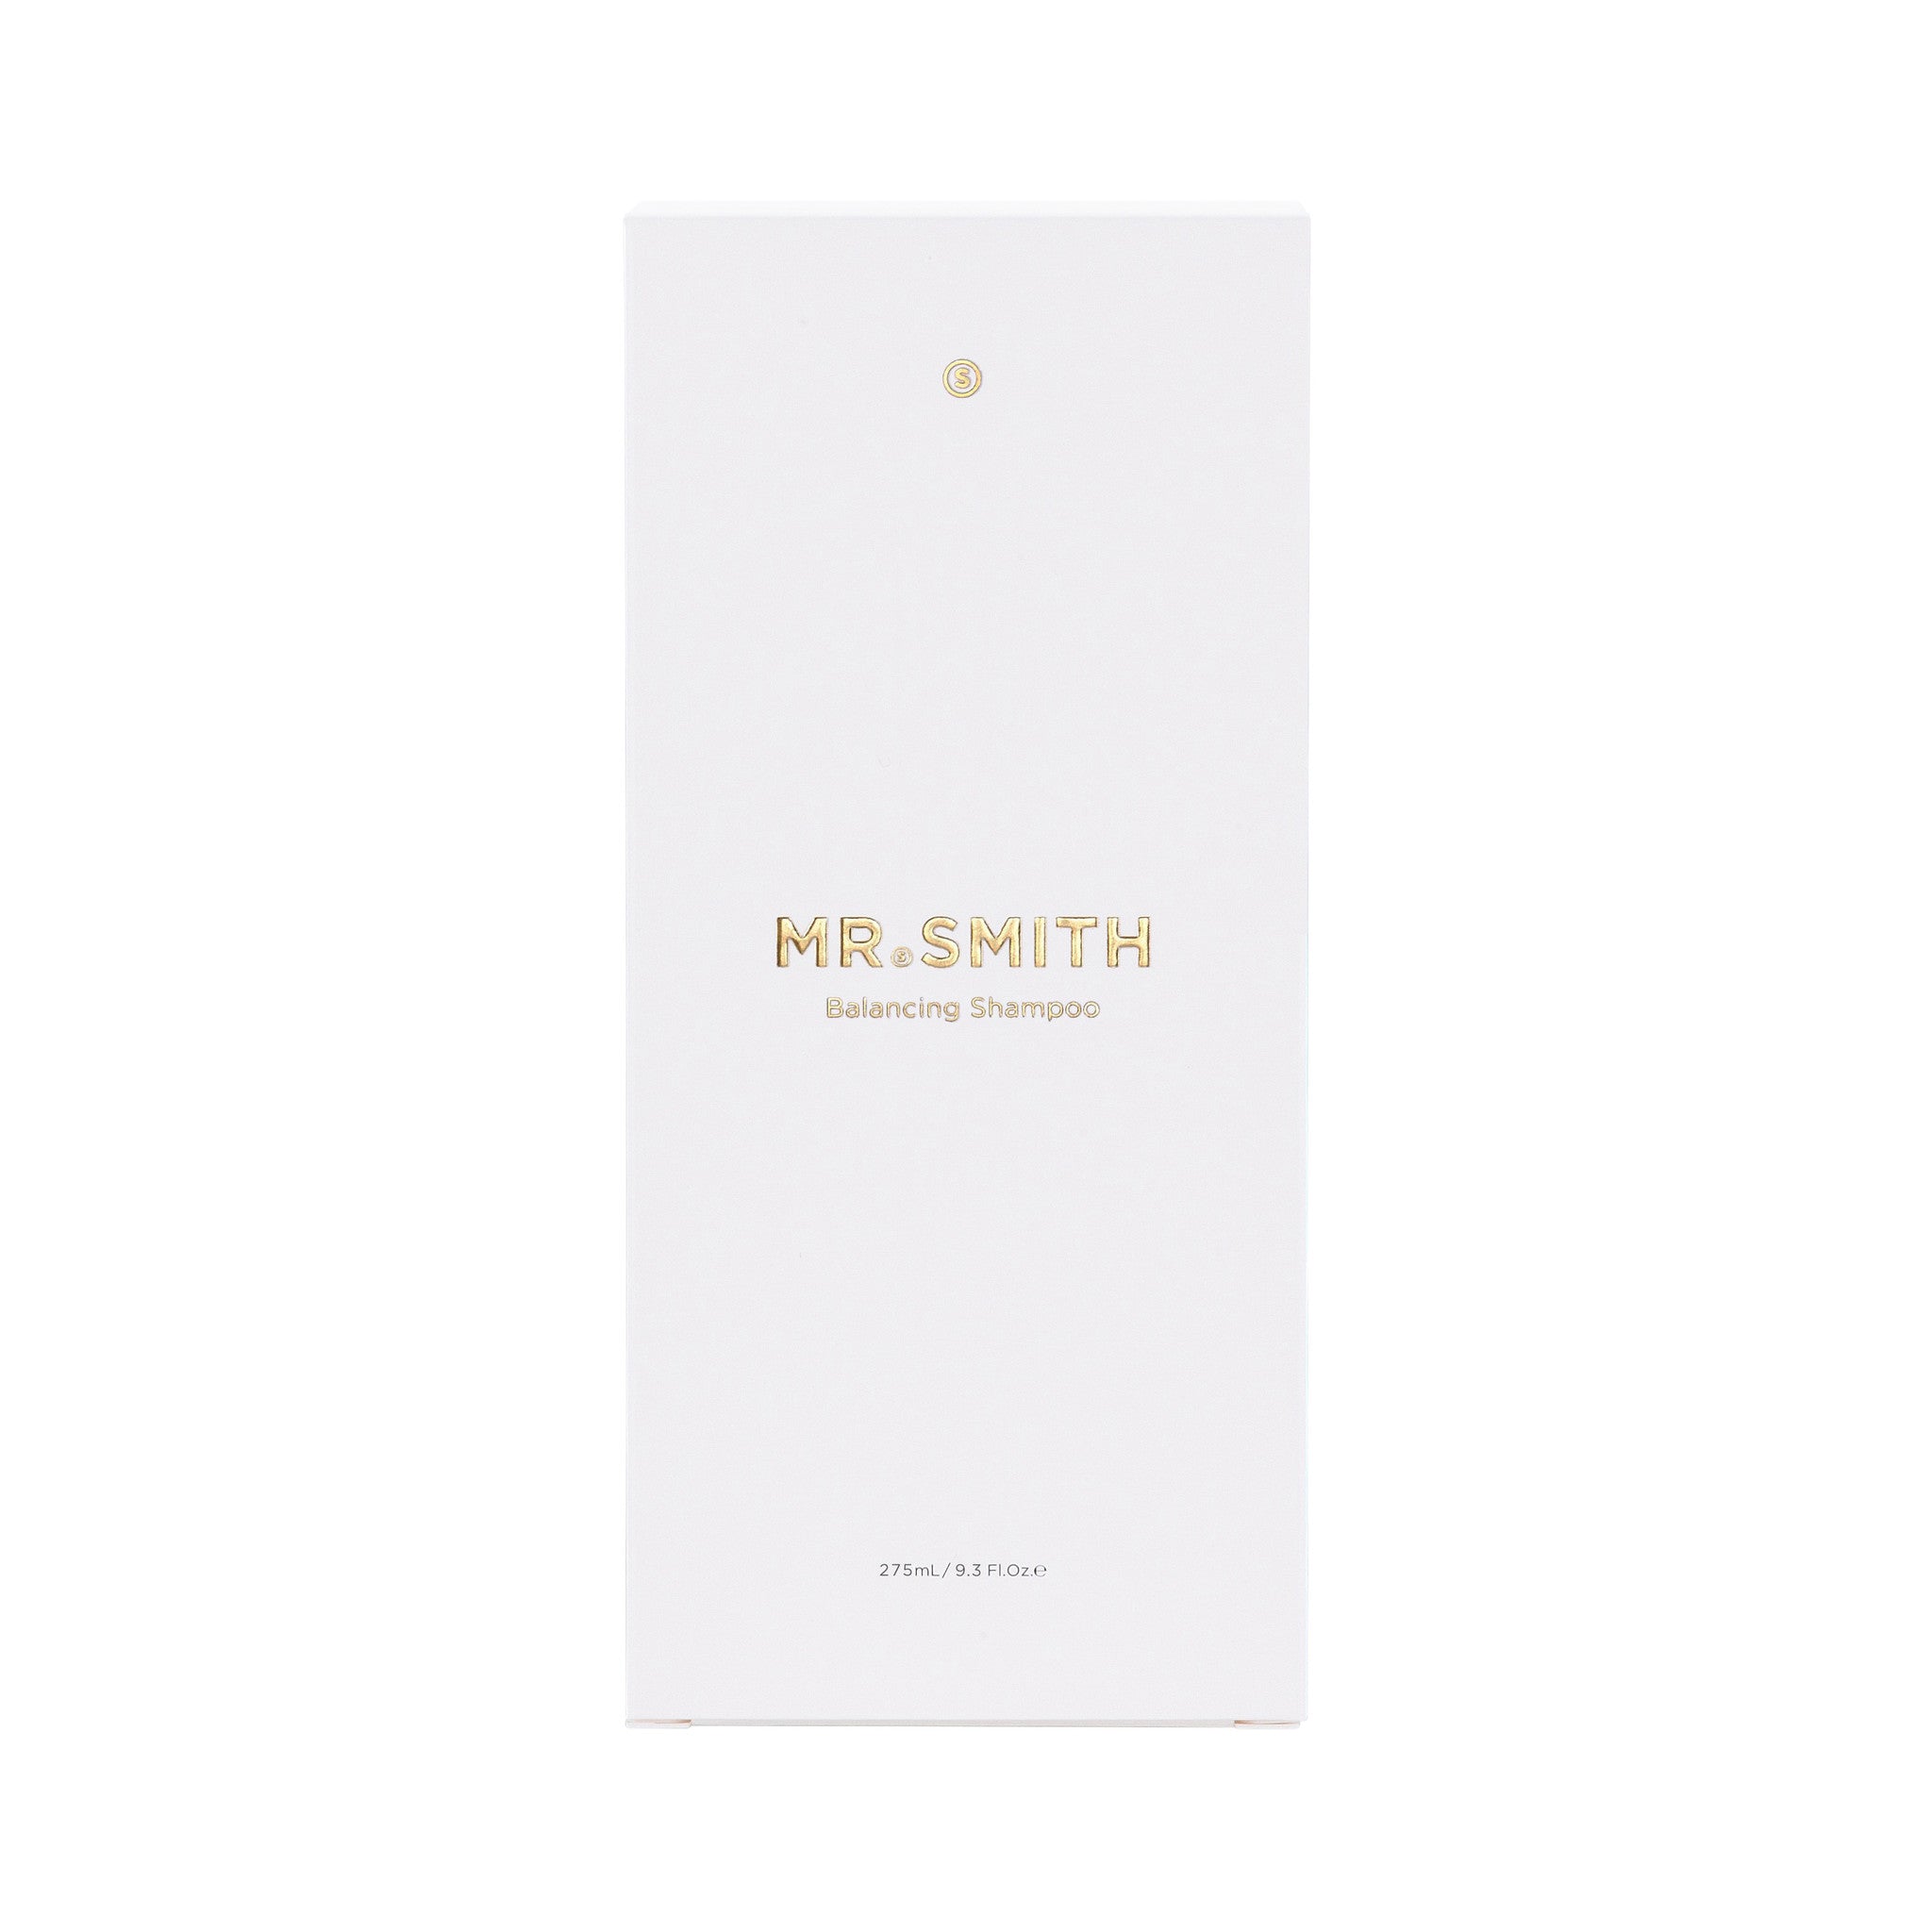 MR. SMITH Balancing Shampoo - 275ml